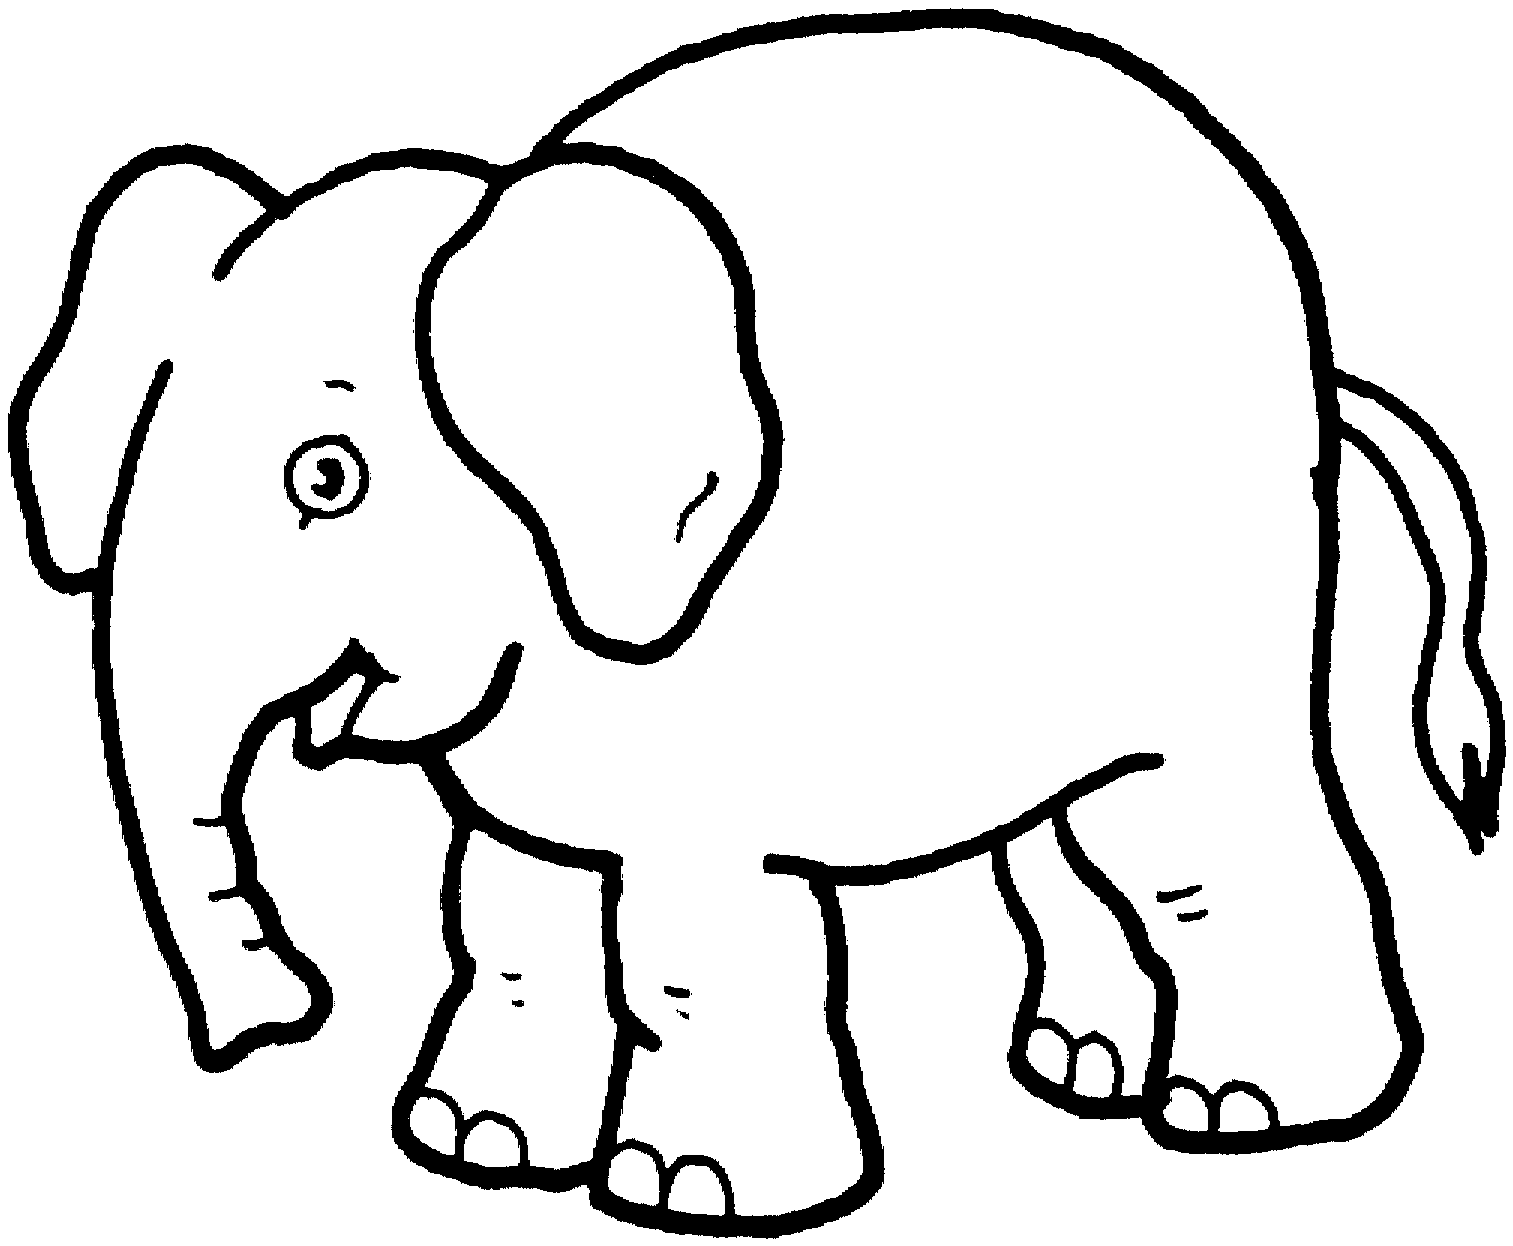 Simple Elephant Outline